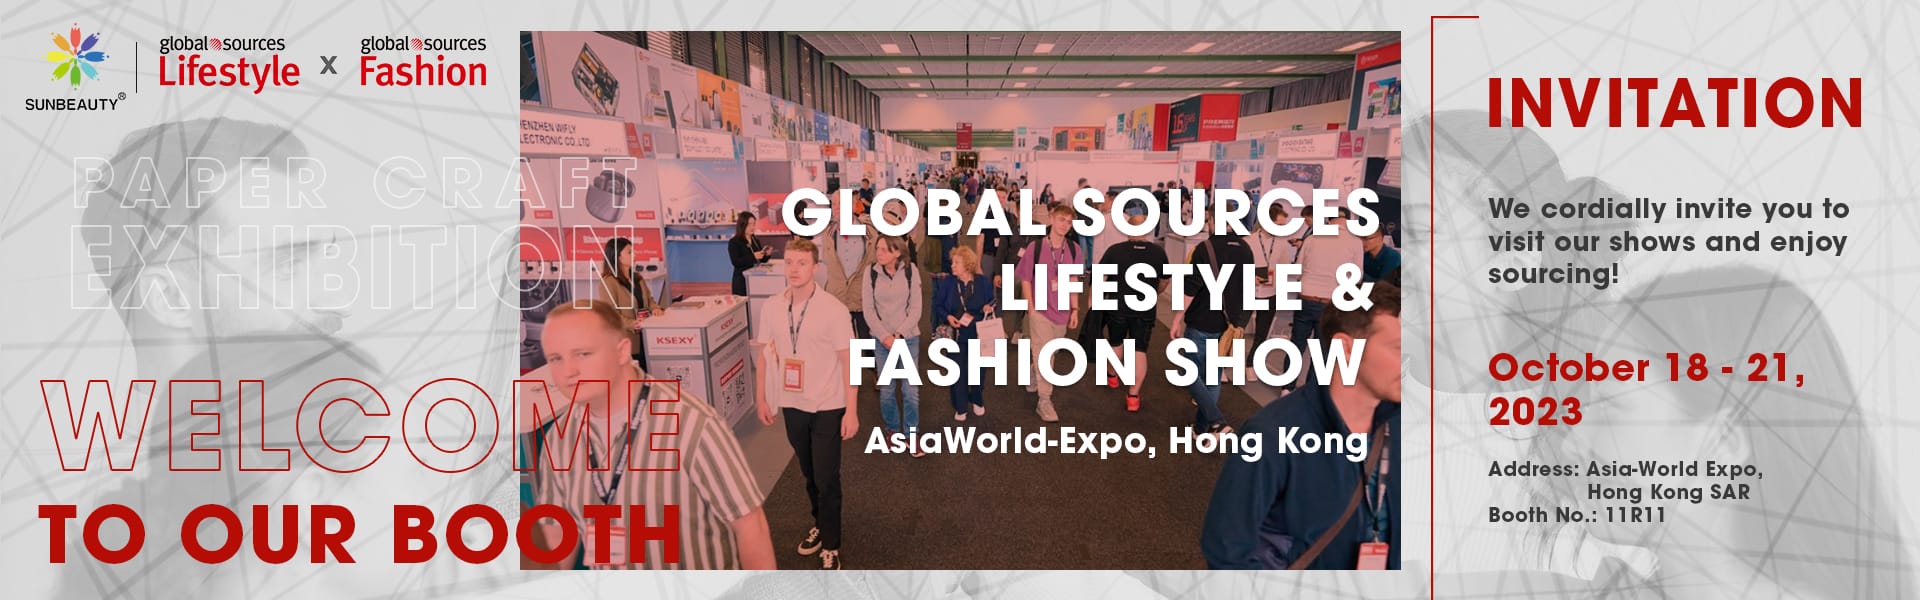 Global Sources Lifestyle & Fashion Expo Asia World-Expo, Hong Kong